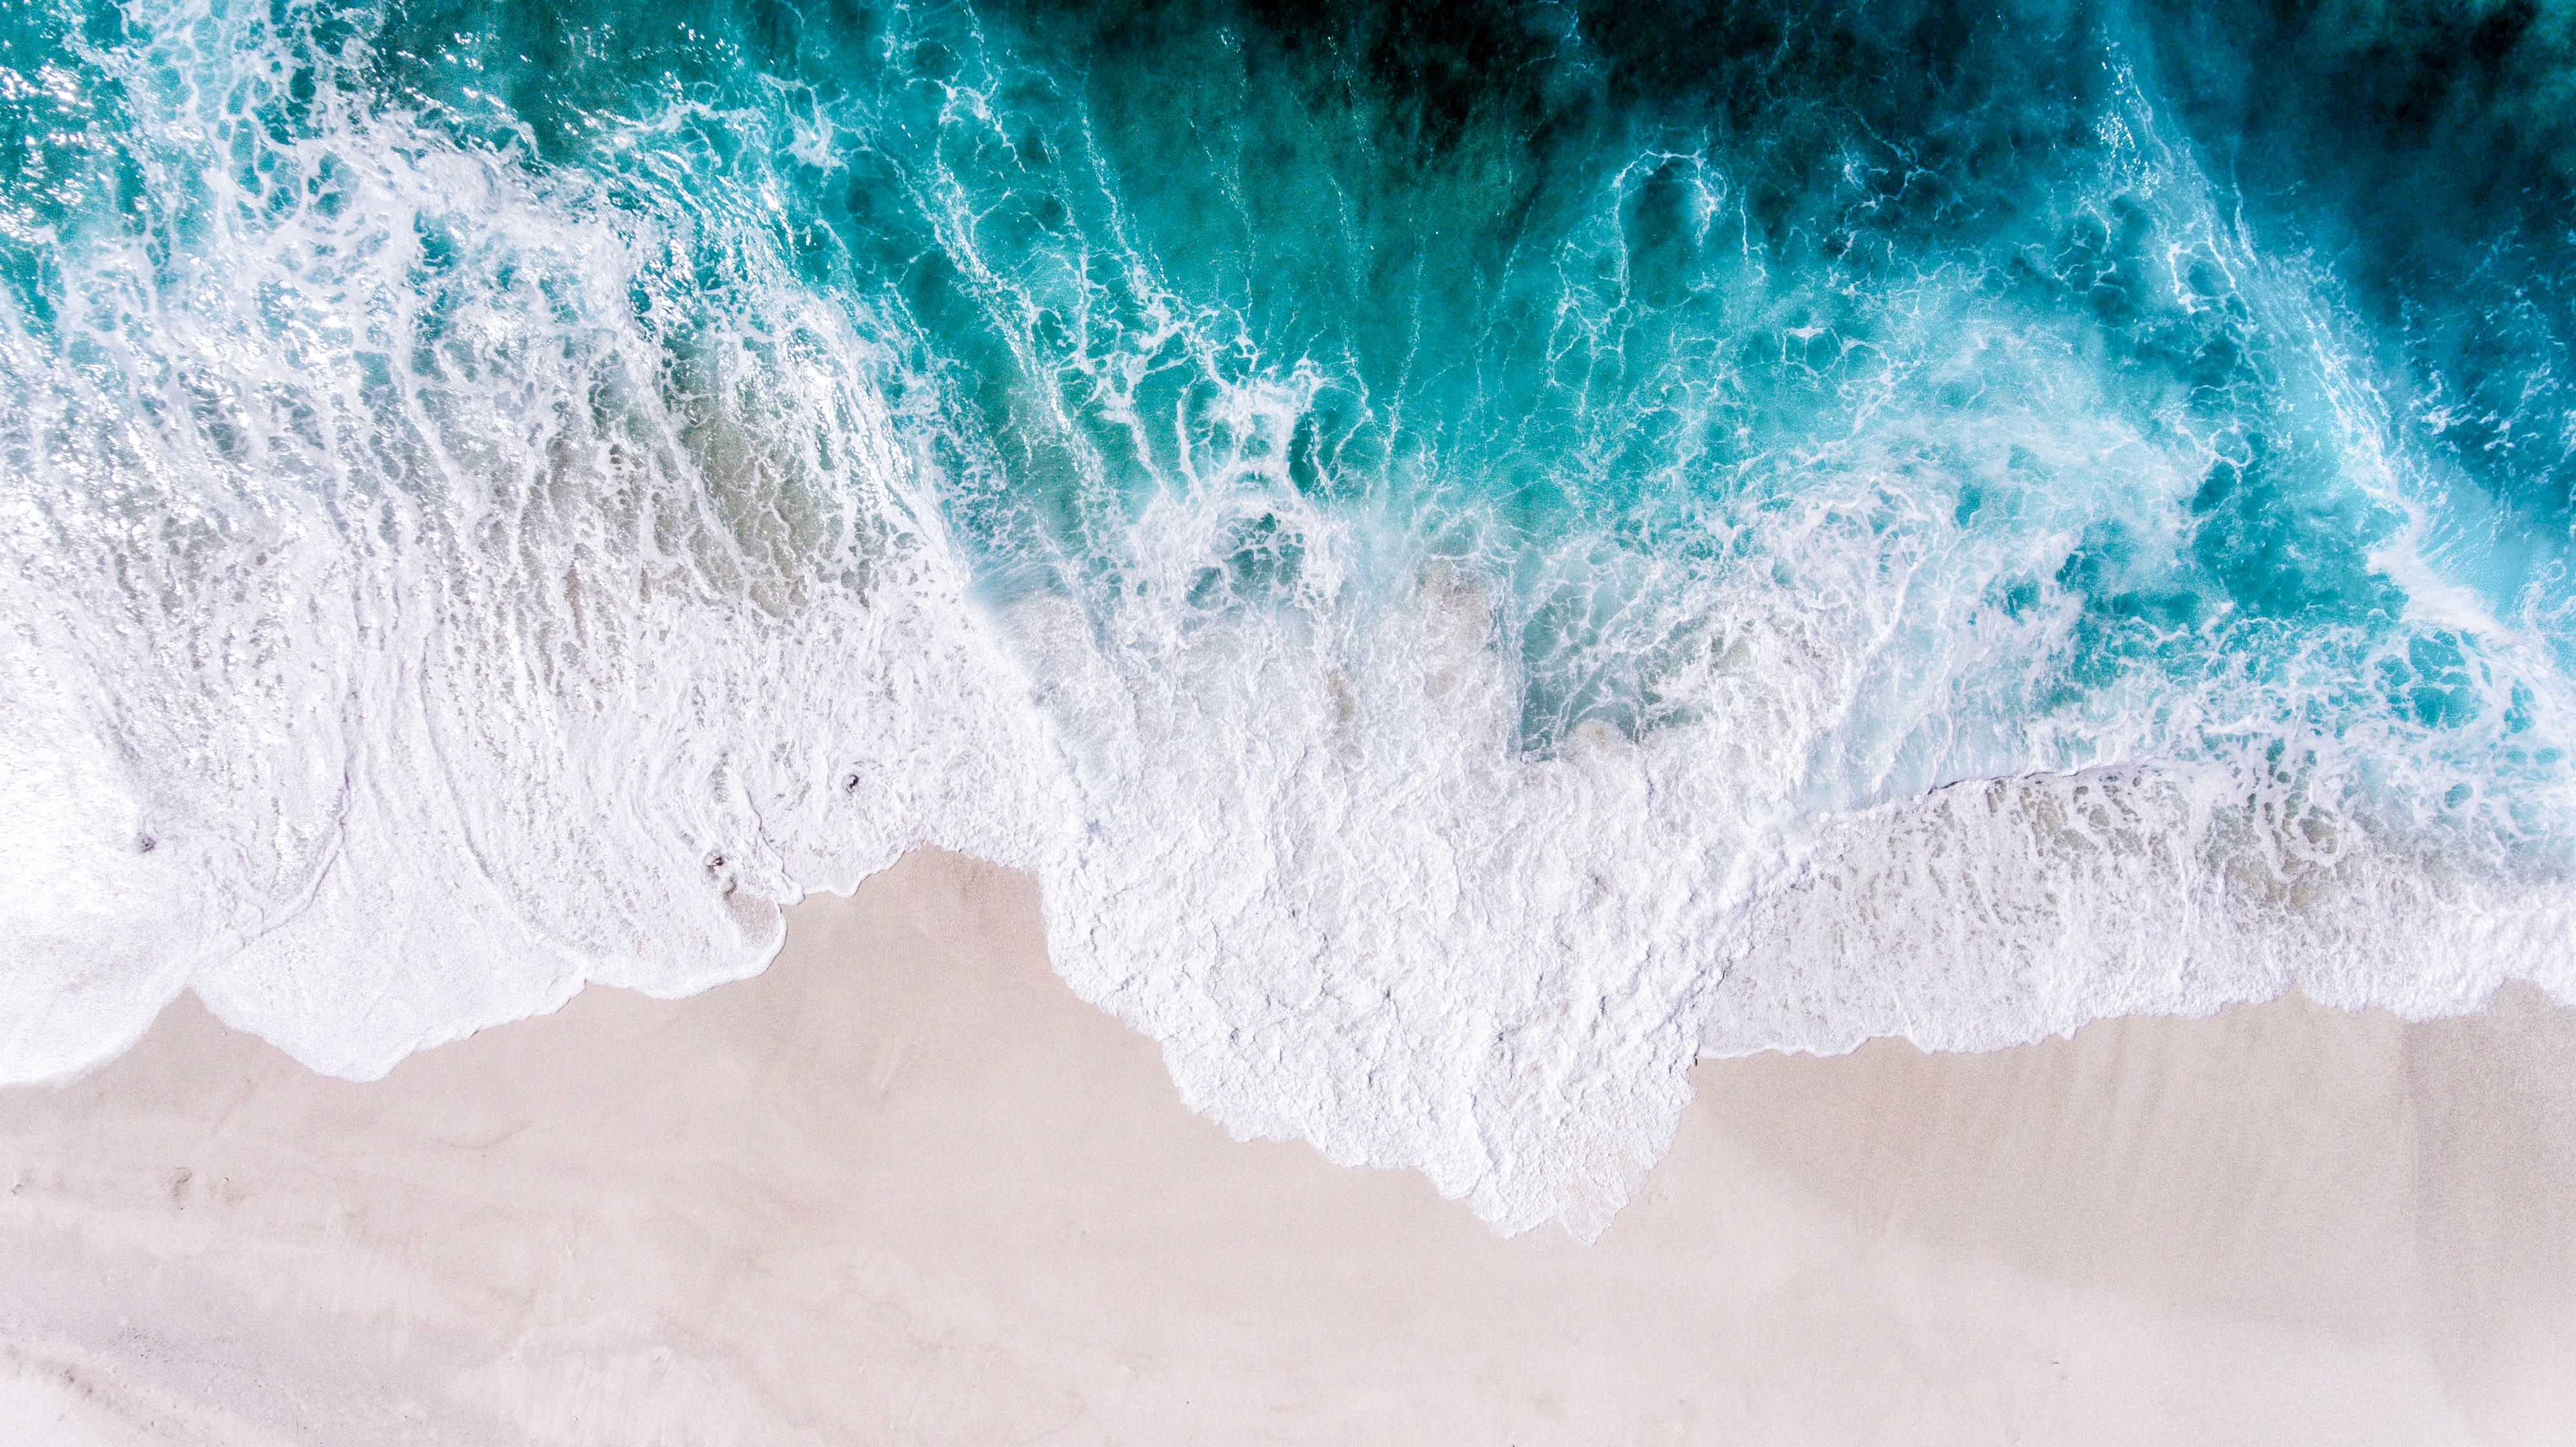 X wallpaper ocean aerial view surf wave foam sand shore ocean wallpaper beachy wallpaper ocean waves